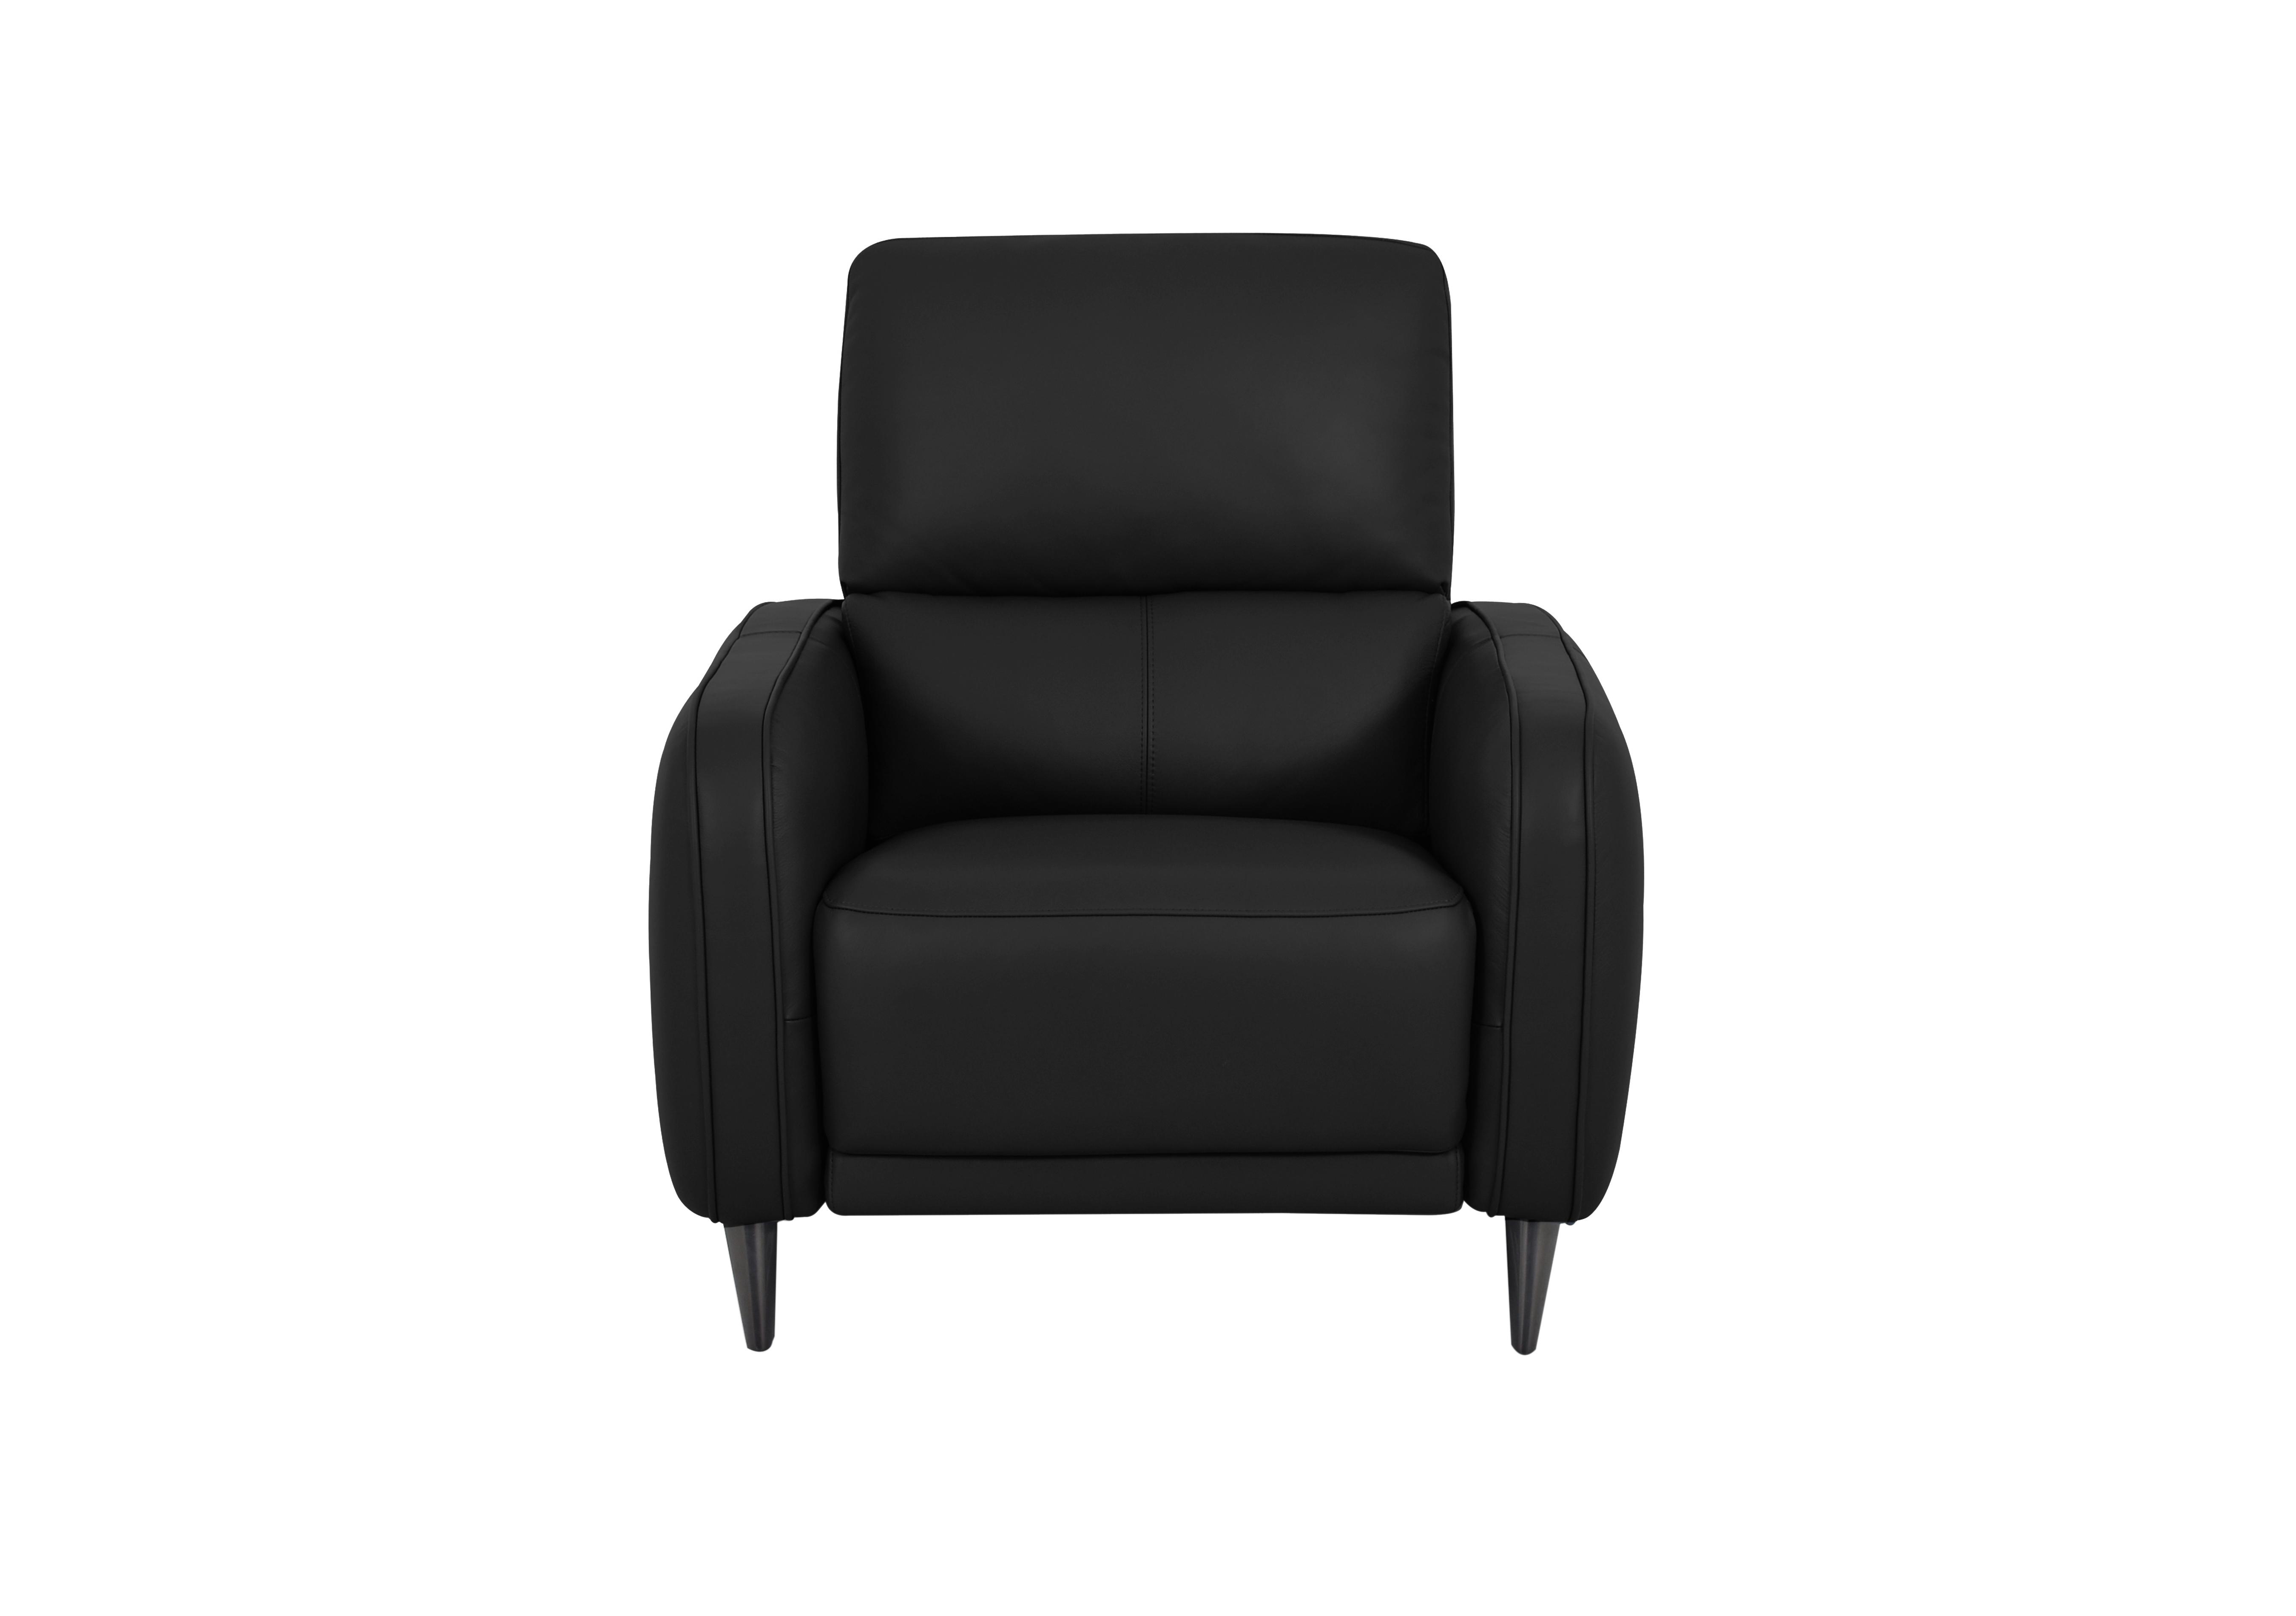 Logan Leather Chair in Nn-514e Black on Furniture Village